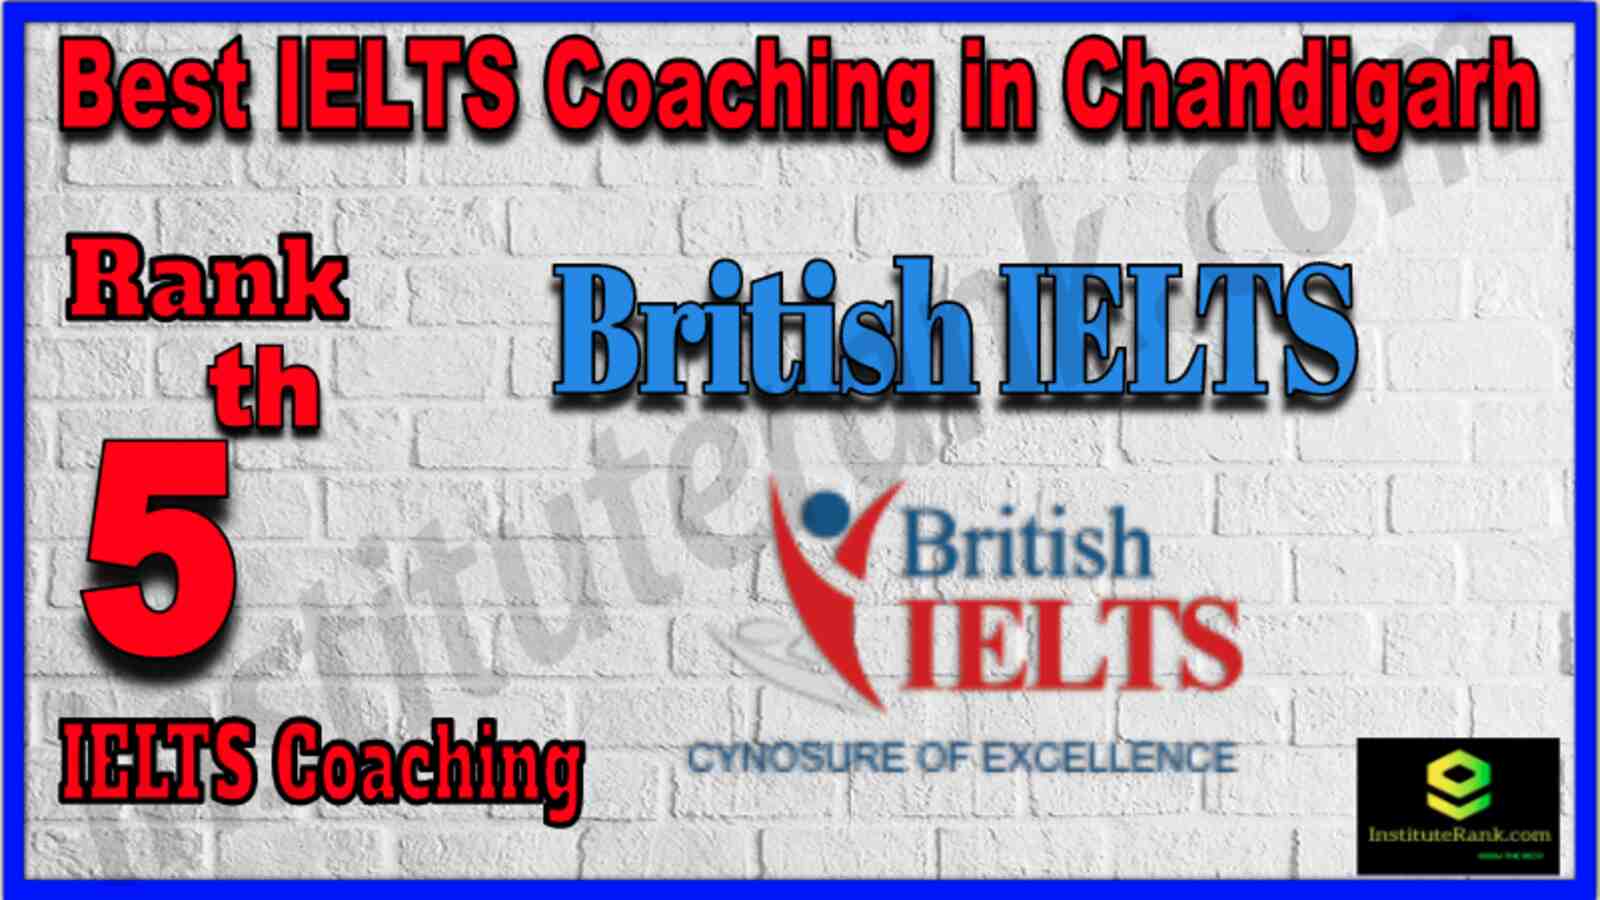 5th Best IELTS Coaching in Chandigarh